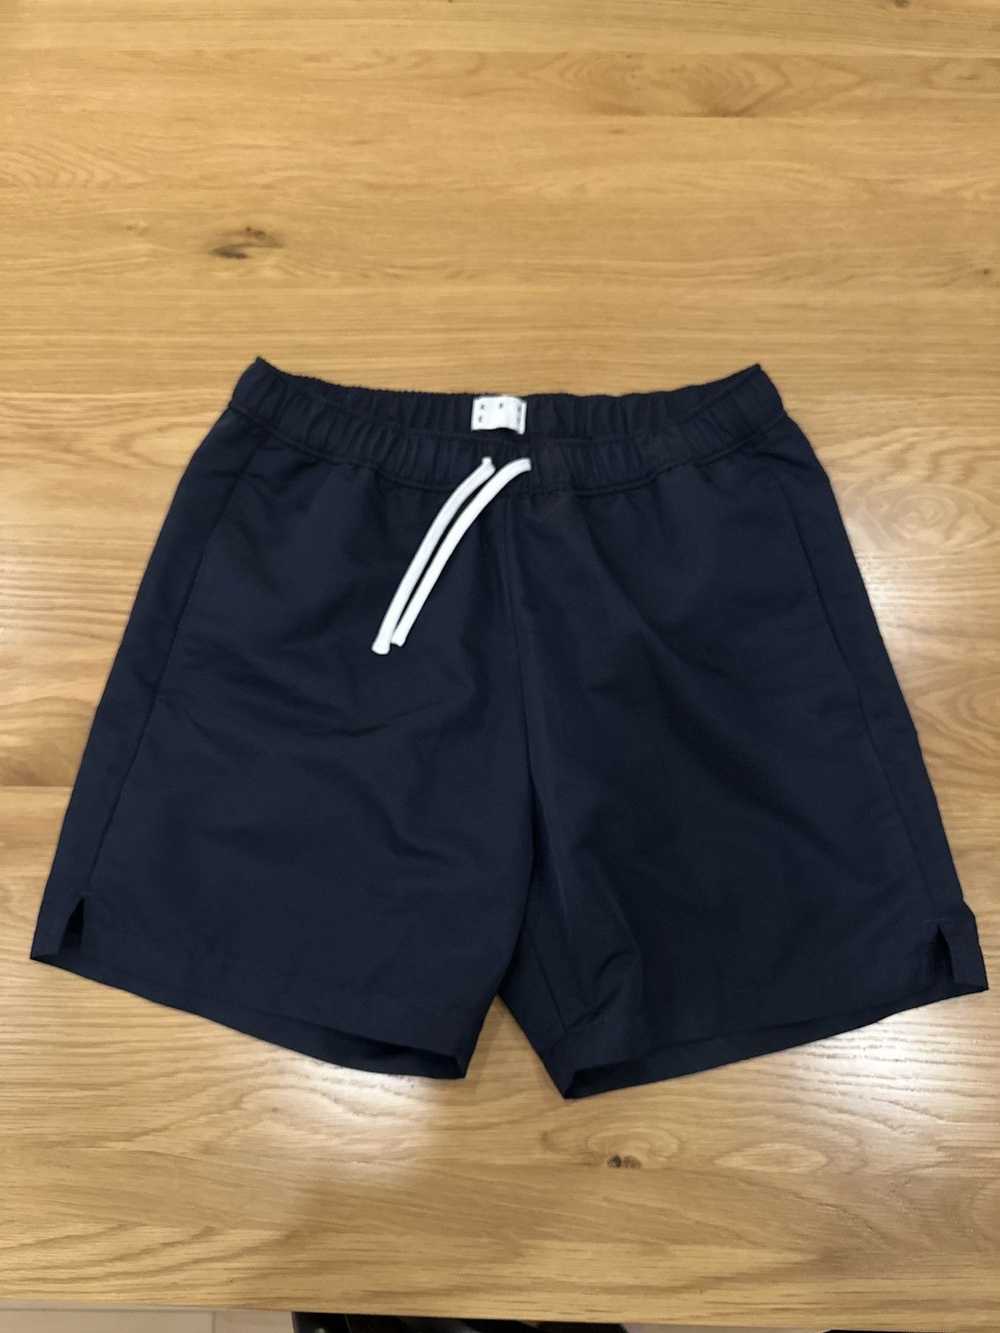 Asket Blue swim shorts (never worn) - image 4